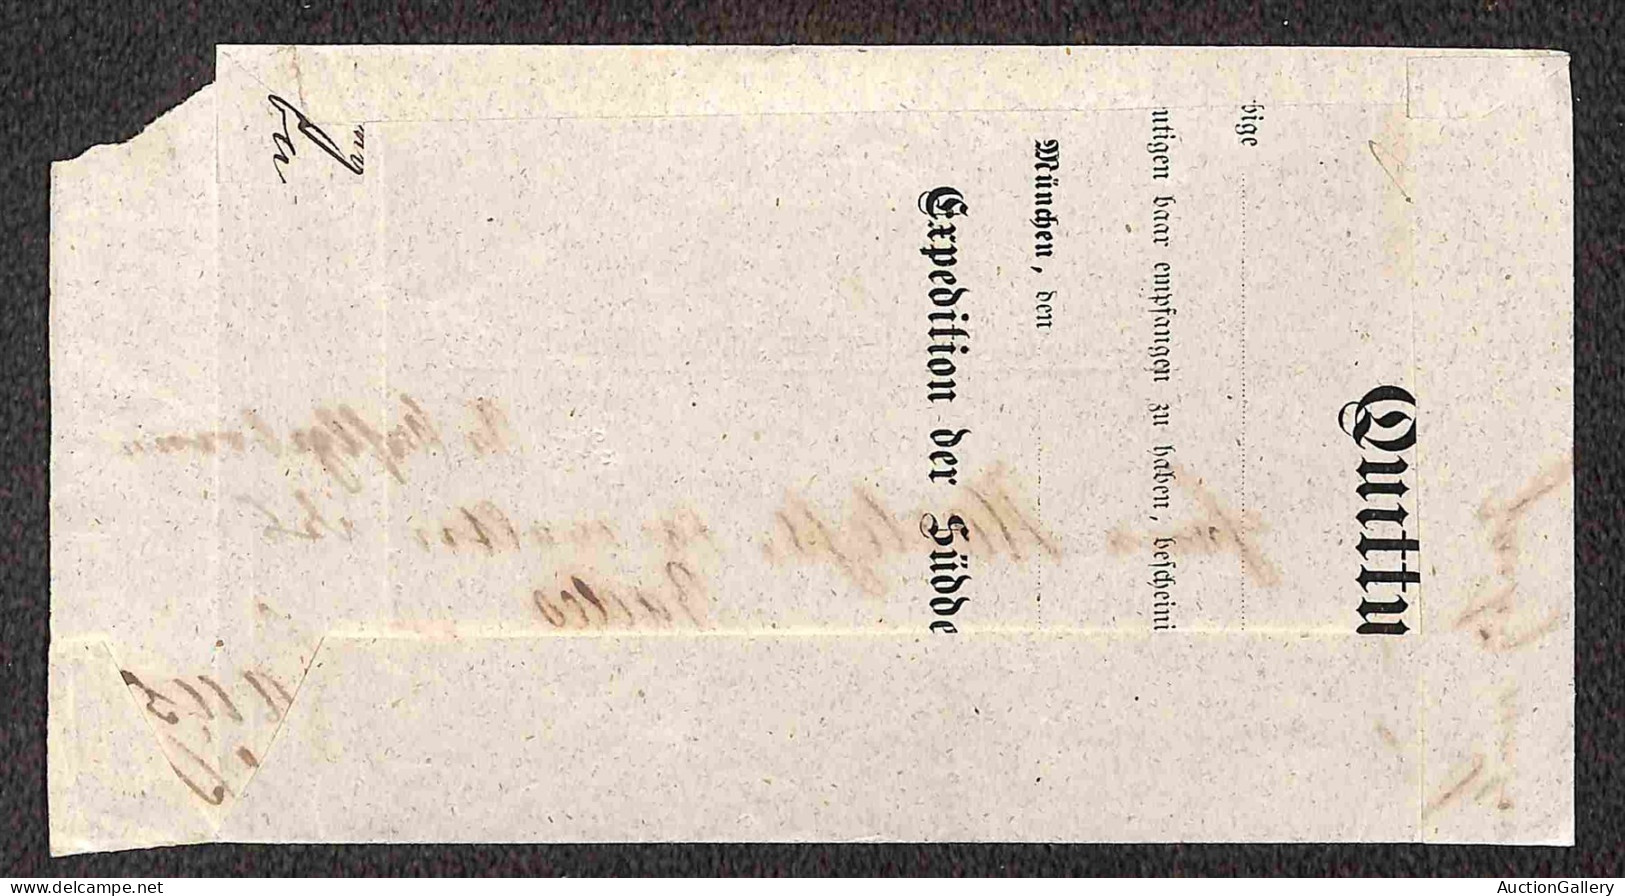 EUROPA - GERMANIA - 1868/1869 - Insieme di 9 oggetti postali affrancati col 3 kreuzer Stemma (16) - da esaminare